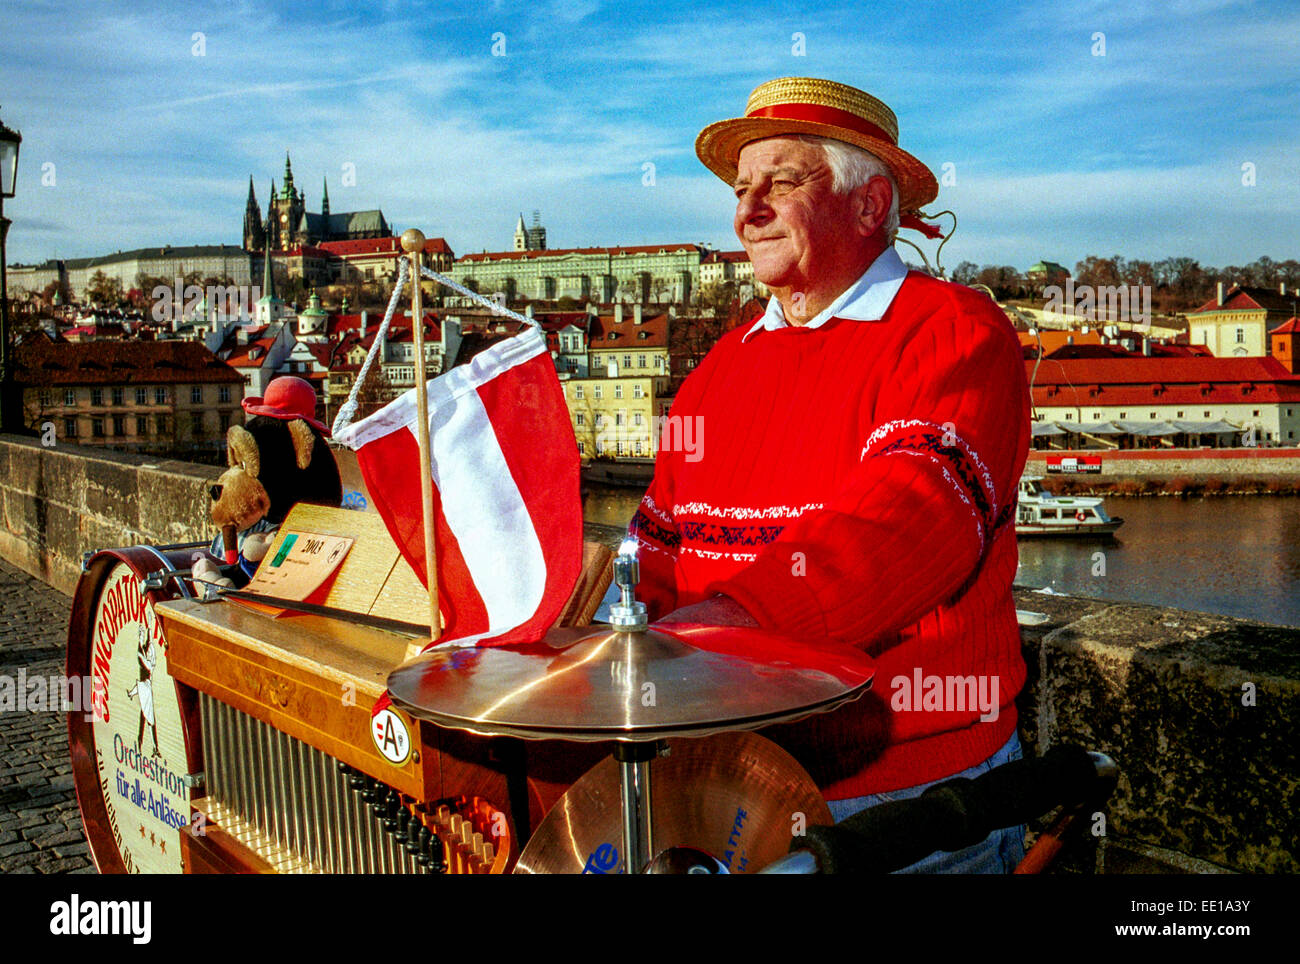 Senior man Musician play on barrel organ, Charles Bridge Prague Castle Czech Republic Europe busker street performer Prague musician Austrian Flag Stock Photo